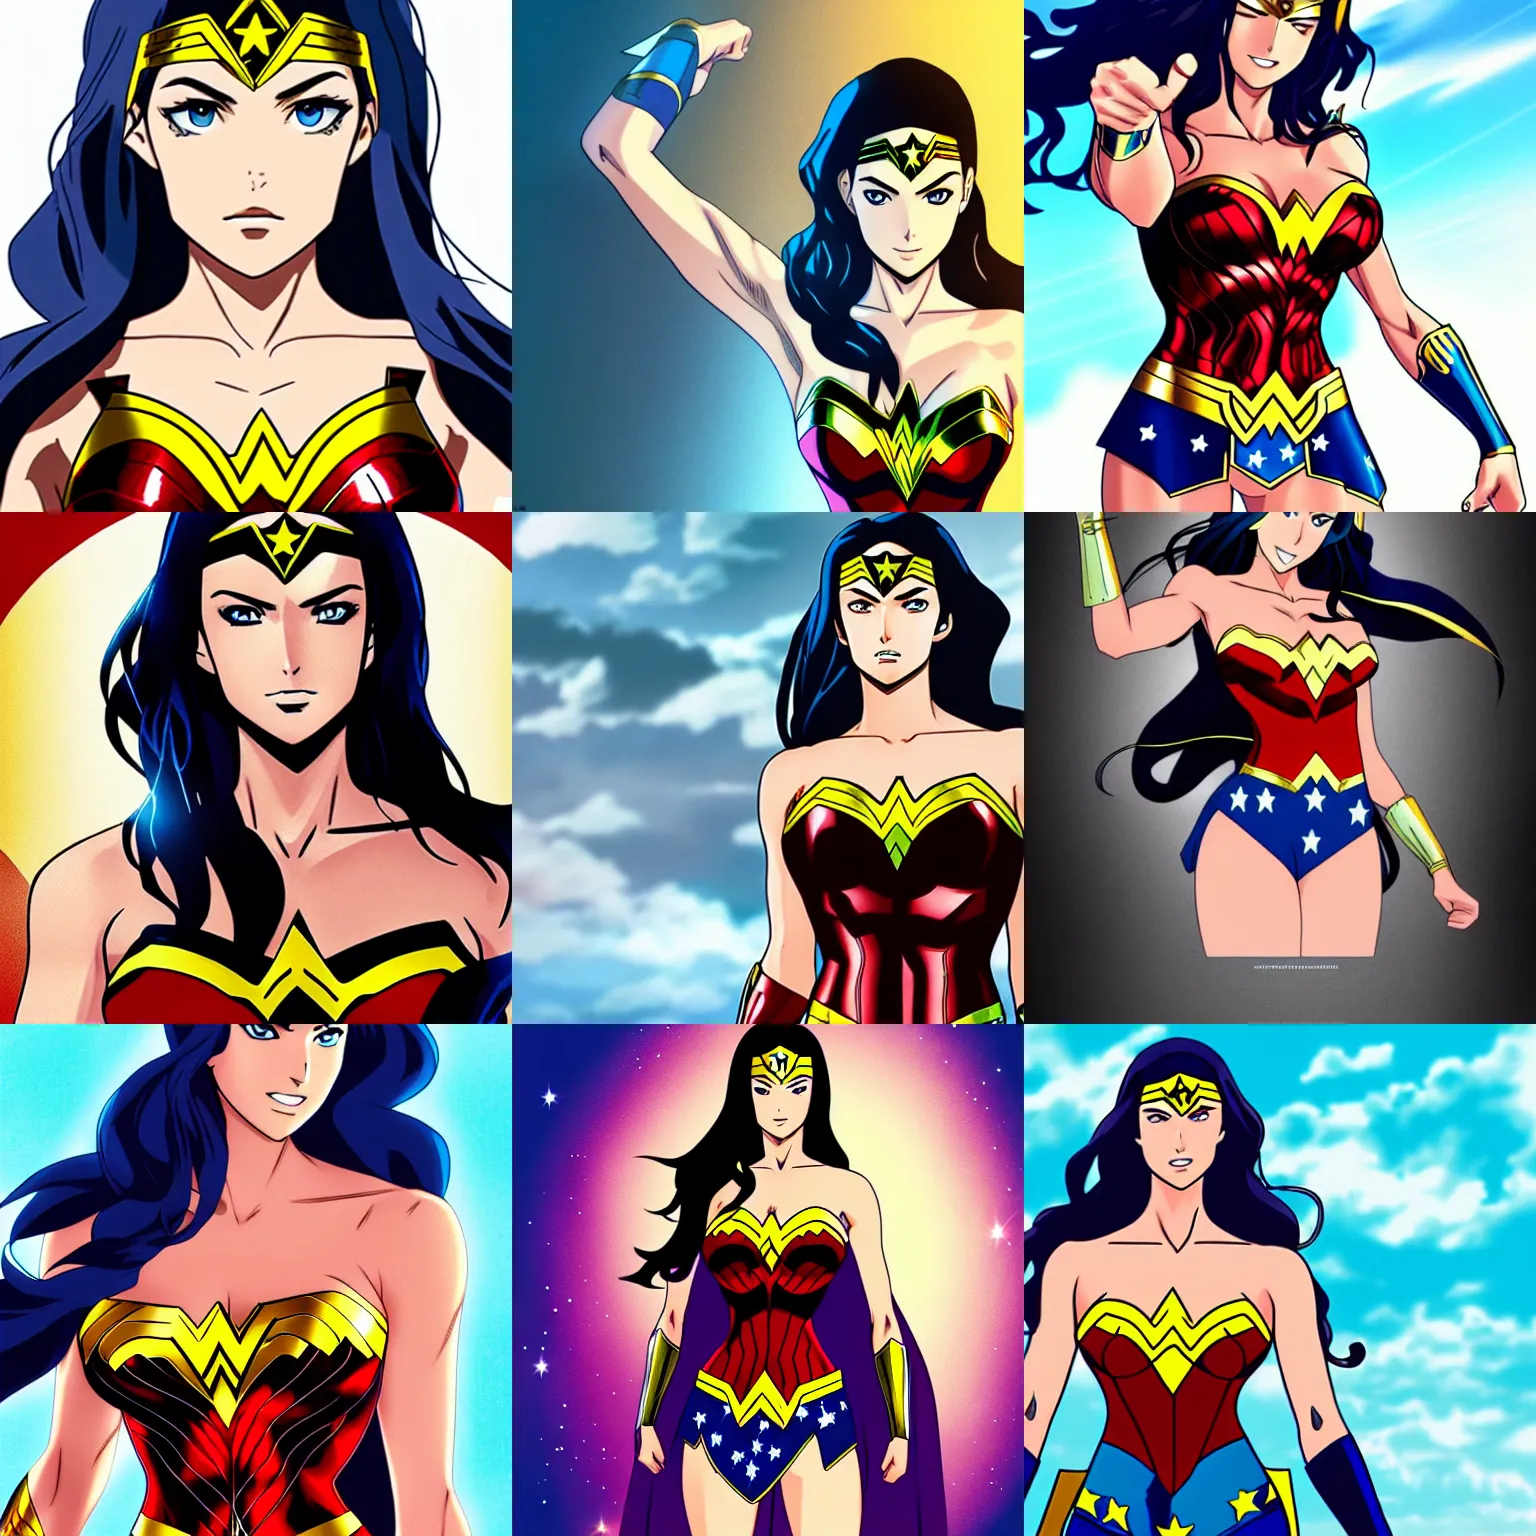 Prompt: Anime Key visual Megan Fox as wonder woman, DC comics, Superhero, official media, artstation, elegant, intricate